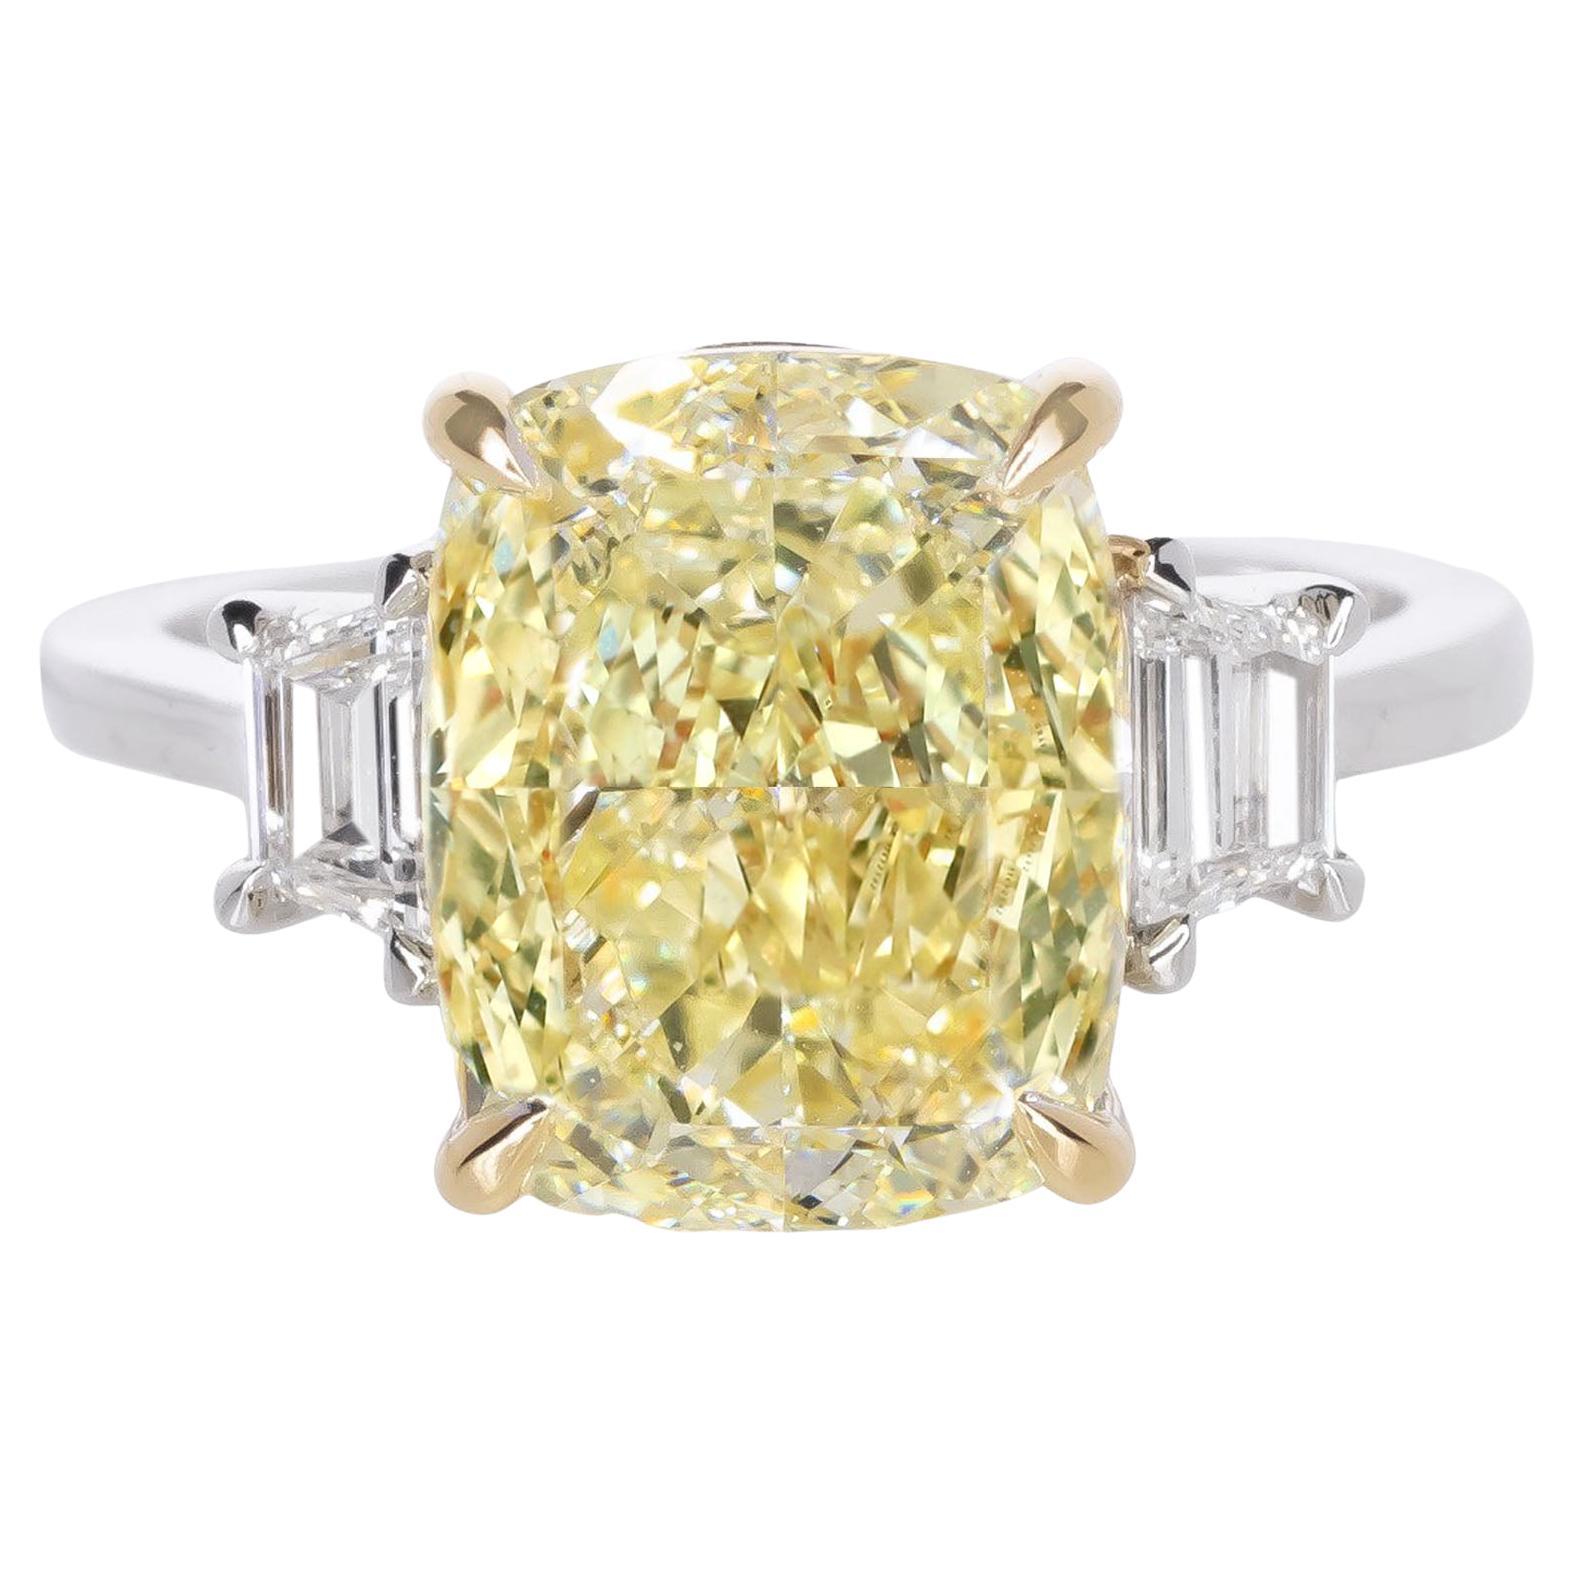 GIA Certified 5 Carat Fancy Yellow Diamond Ring VVS2 Clarity For Sale